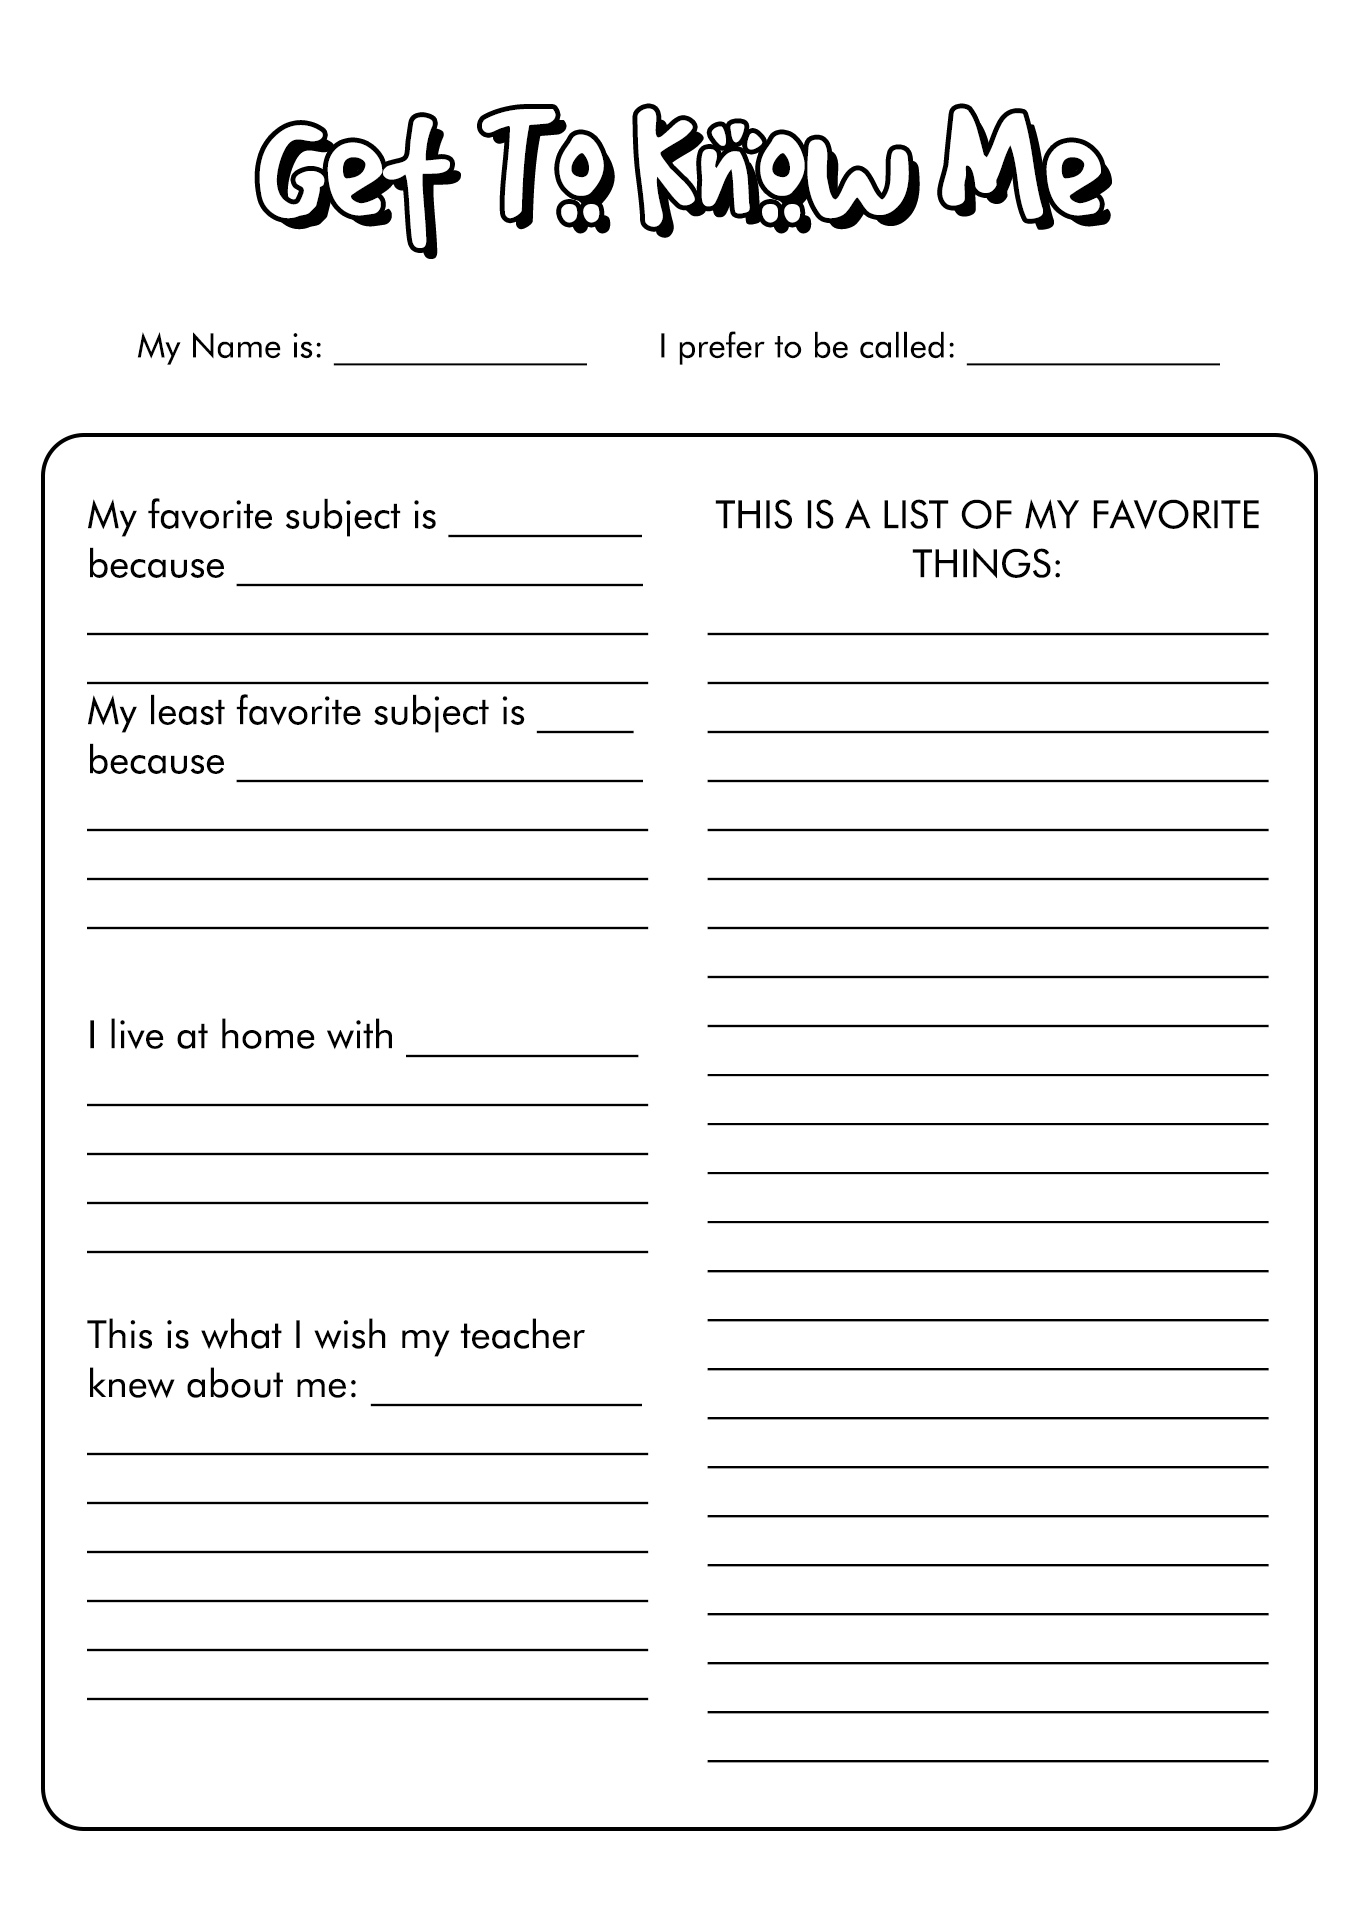 14 All About Me Worksheet Kids - Free PDF at worksheeto.com